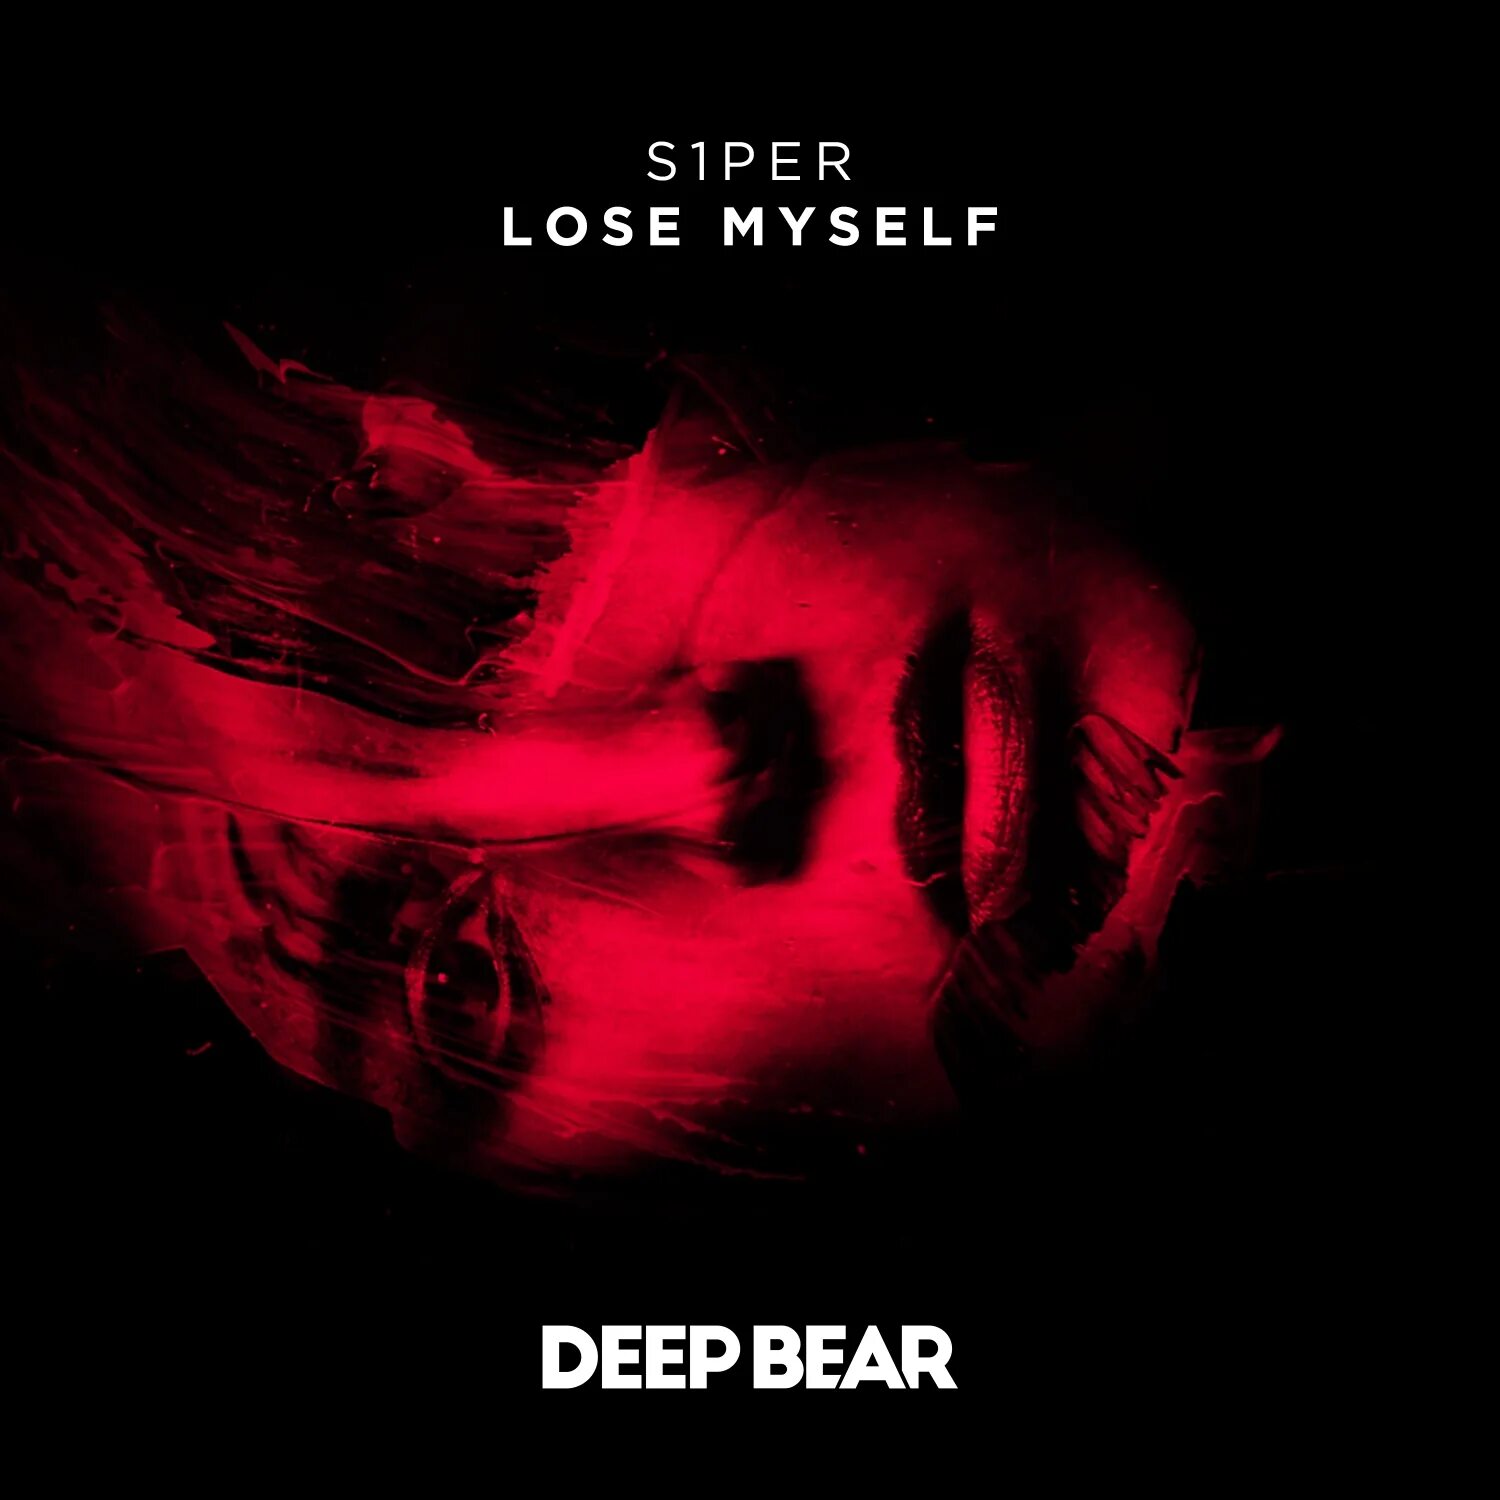 Play myself. Lose myself. Lose myself Reyko. Swim - lose myself. Deep Bear.